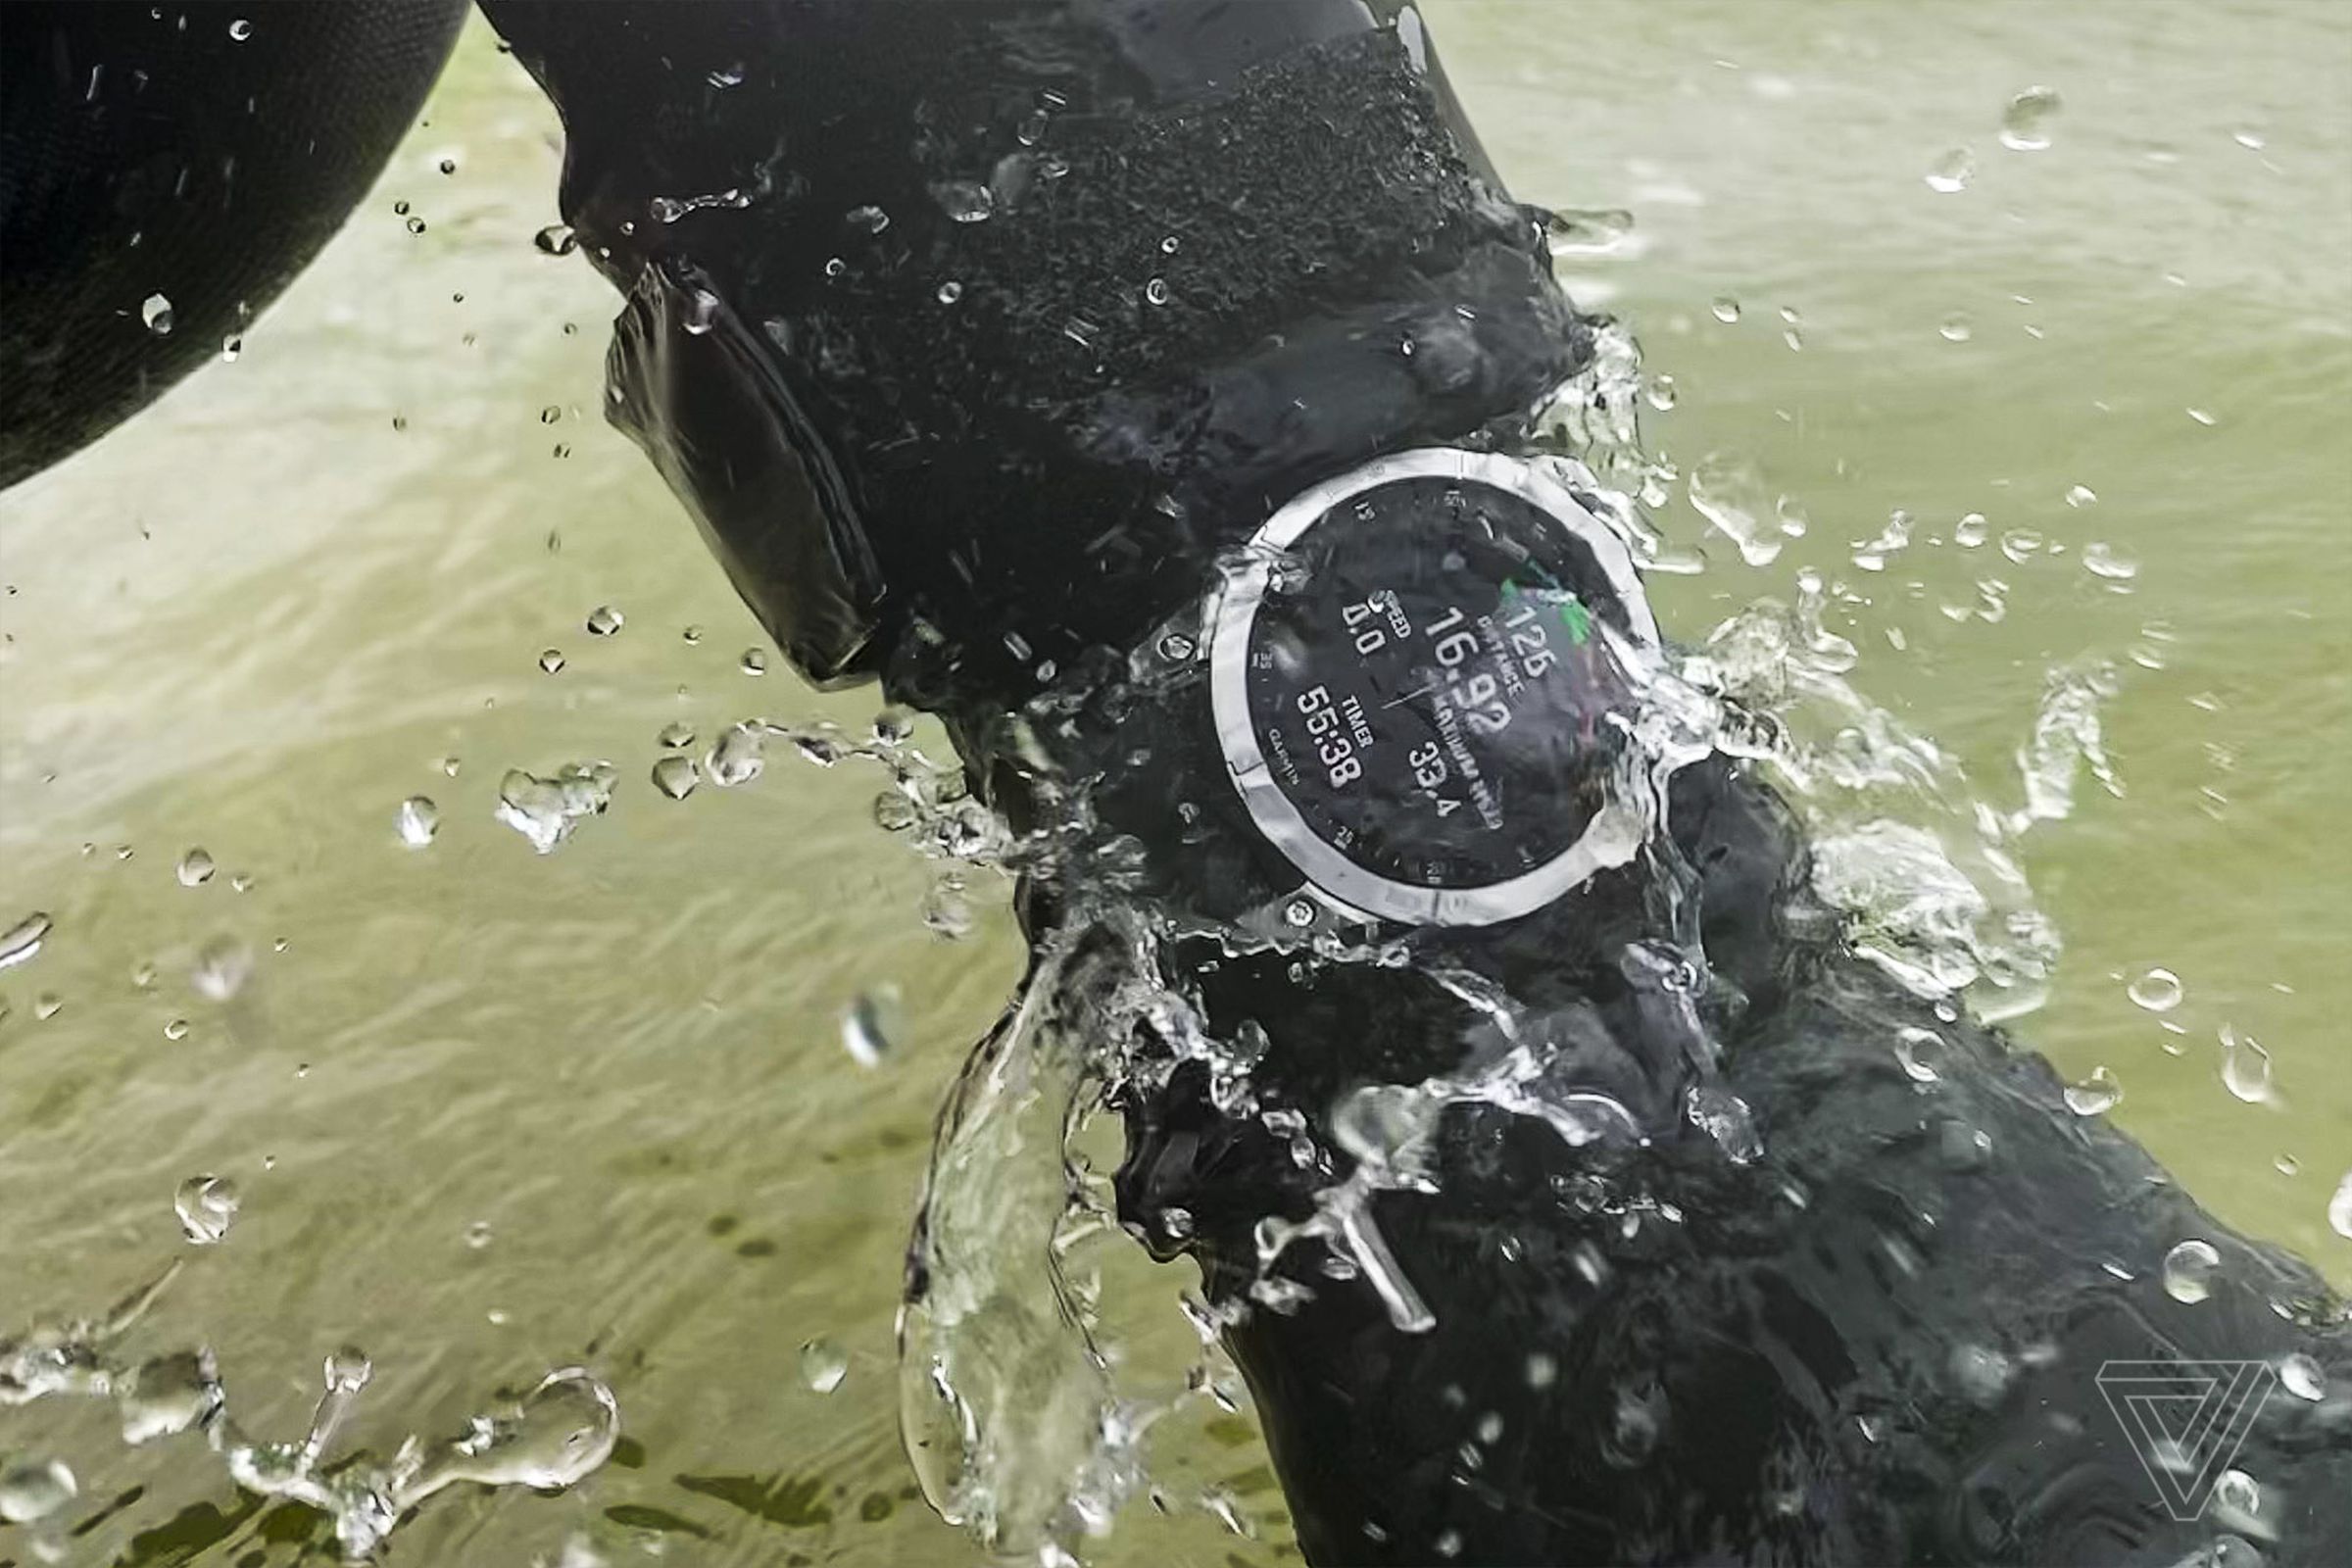 Waterproof up to 100 meters, something Apple can’t claim.